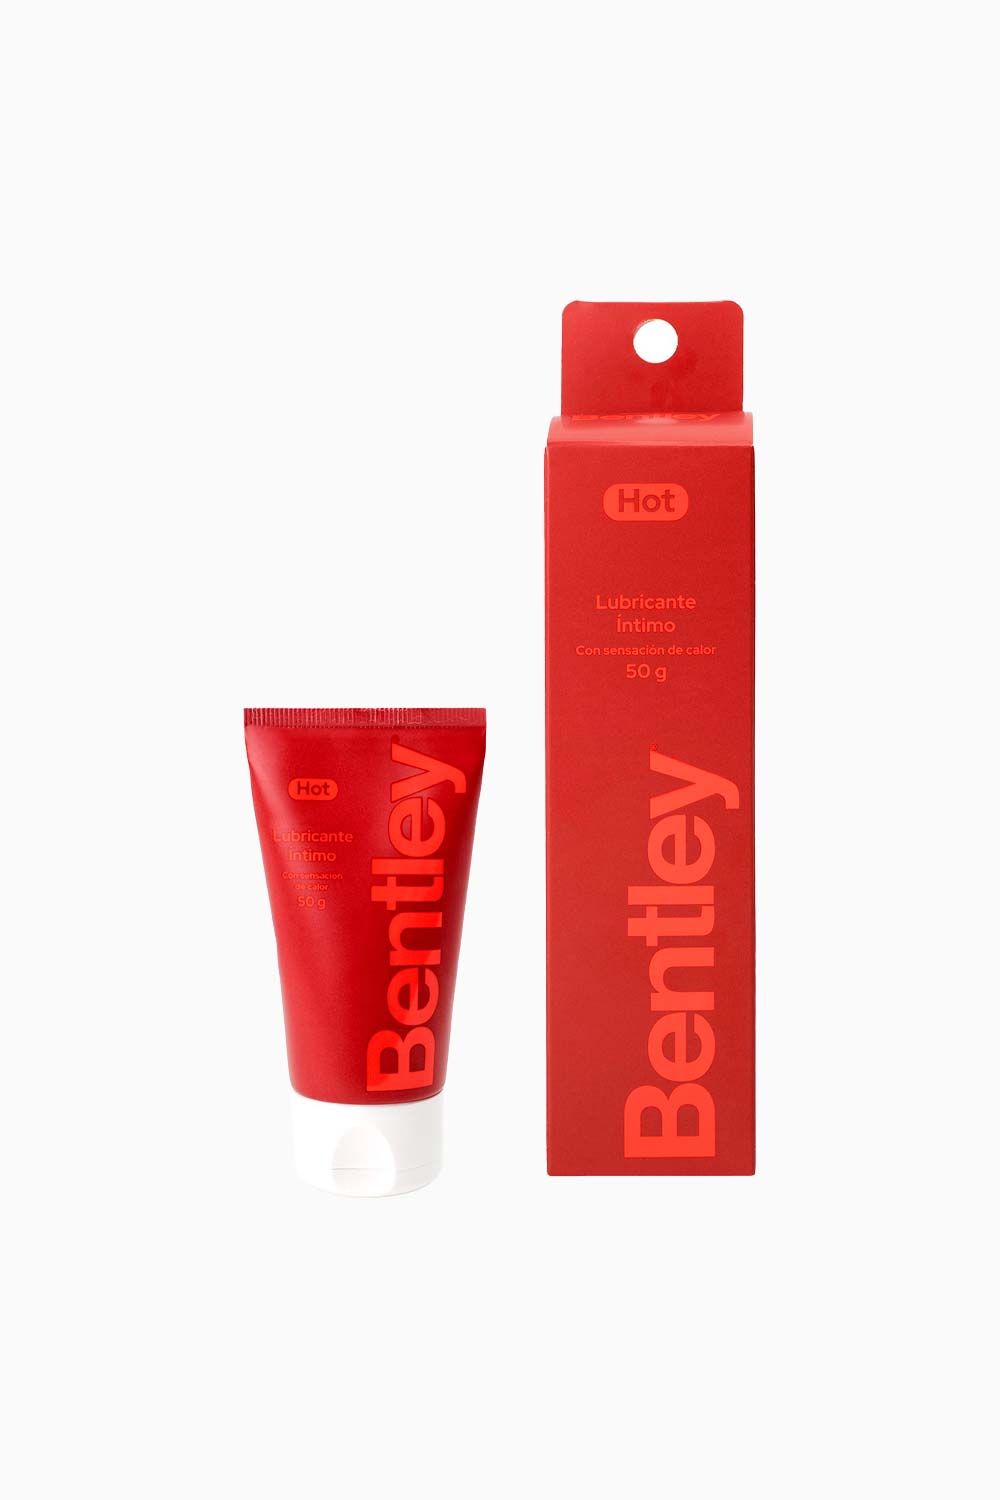 BENTLEY HOT | Lubricante Base Agua 50g